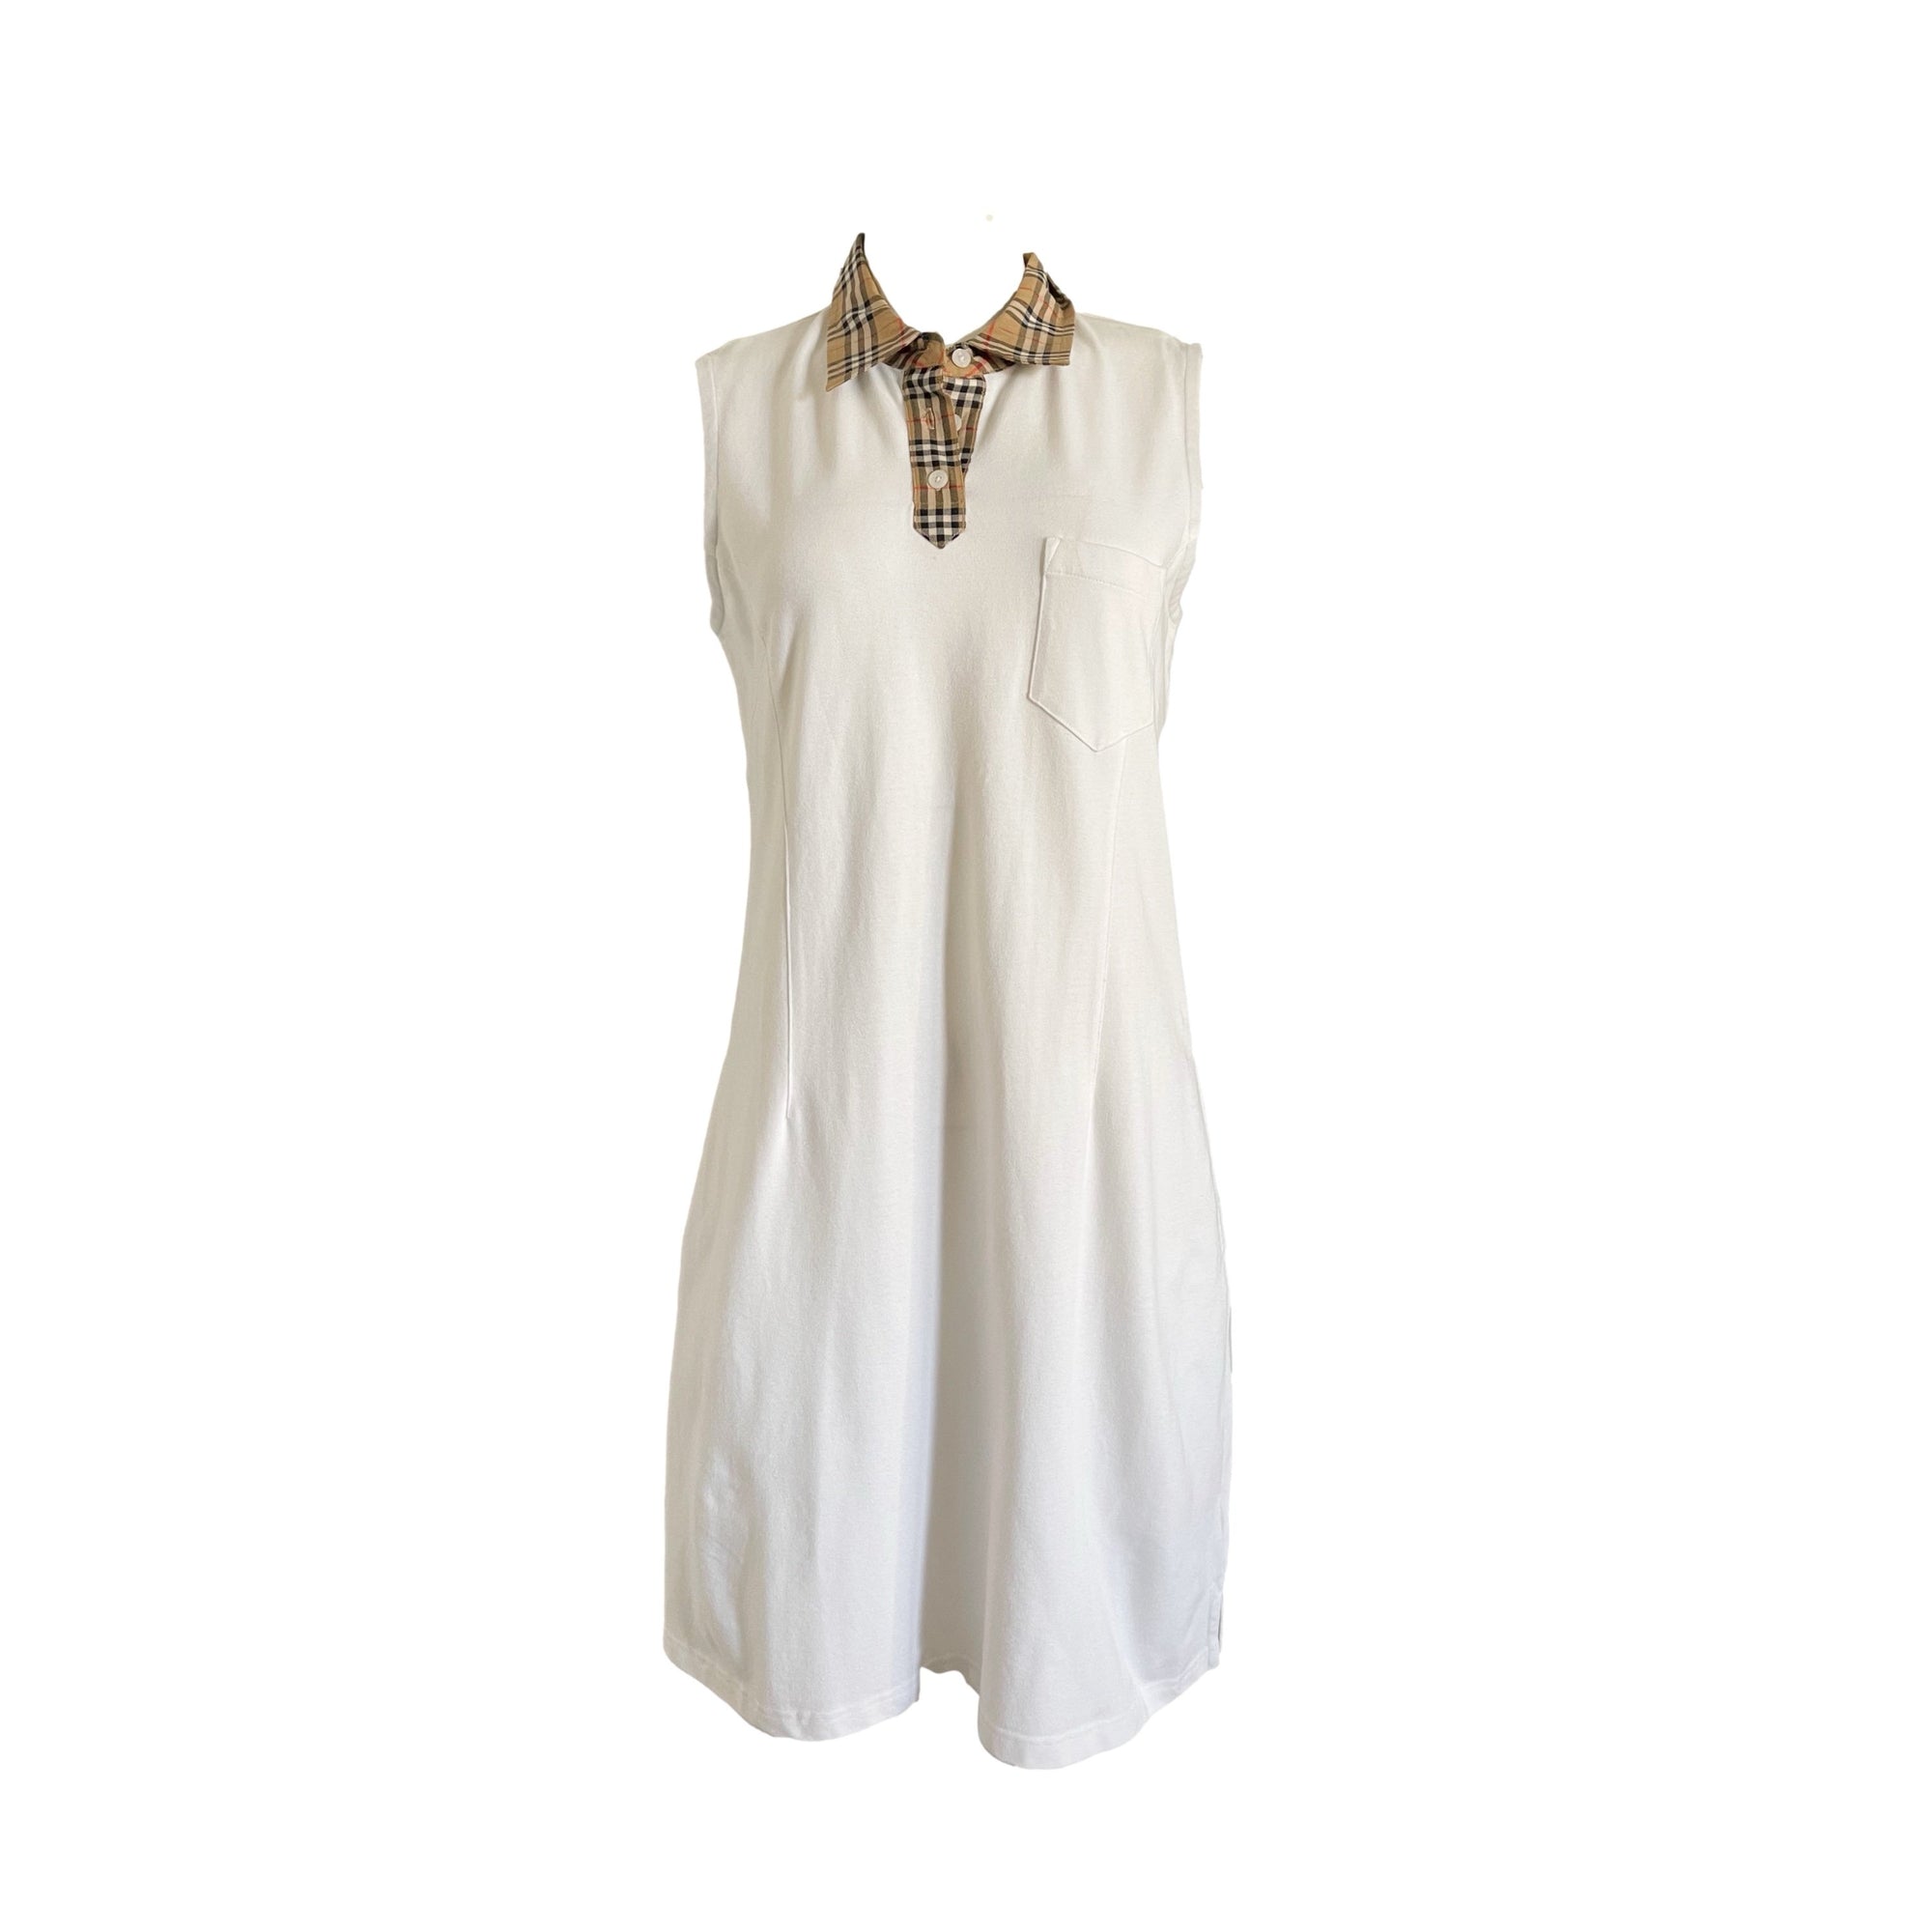 Burberry White Pocket Tank Dress - Apparel